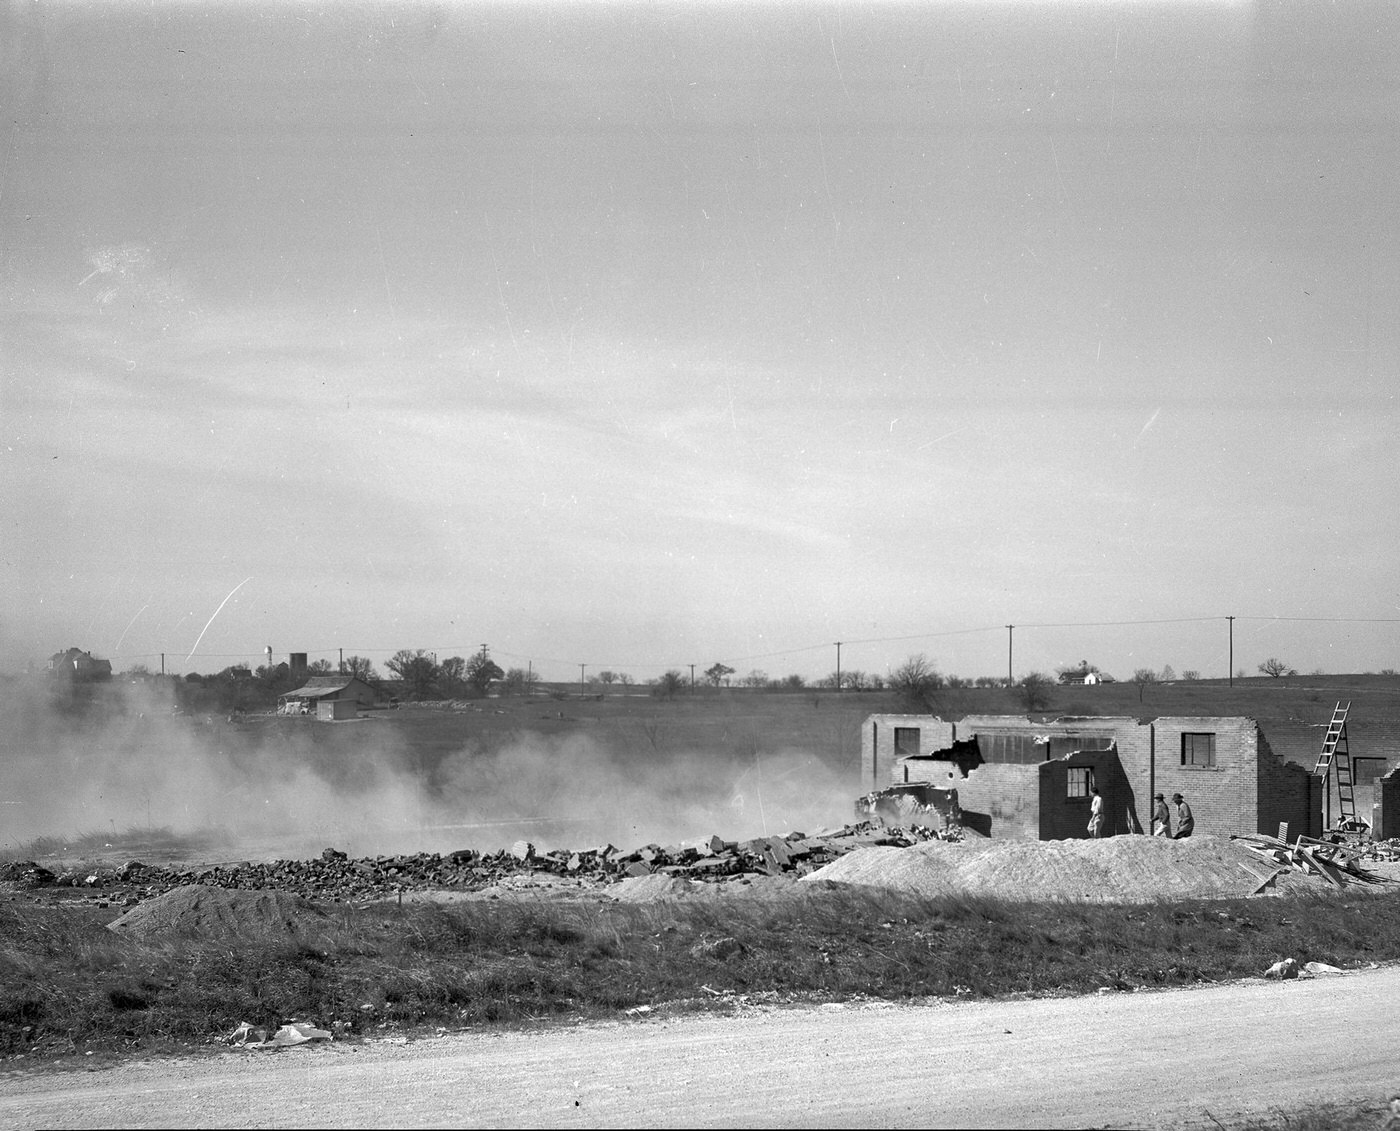 The Arlington Heights landmark demolition of a 75 foot incinerator, 1948